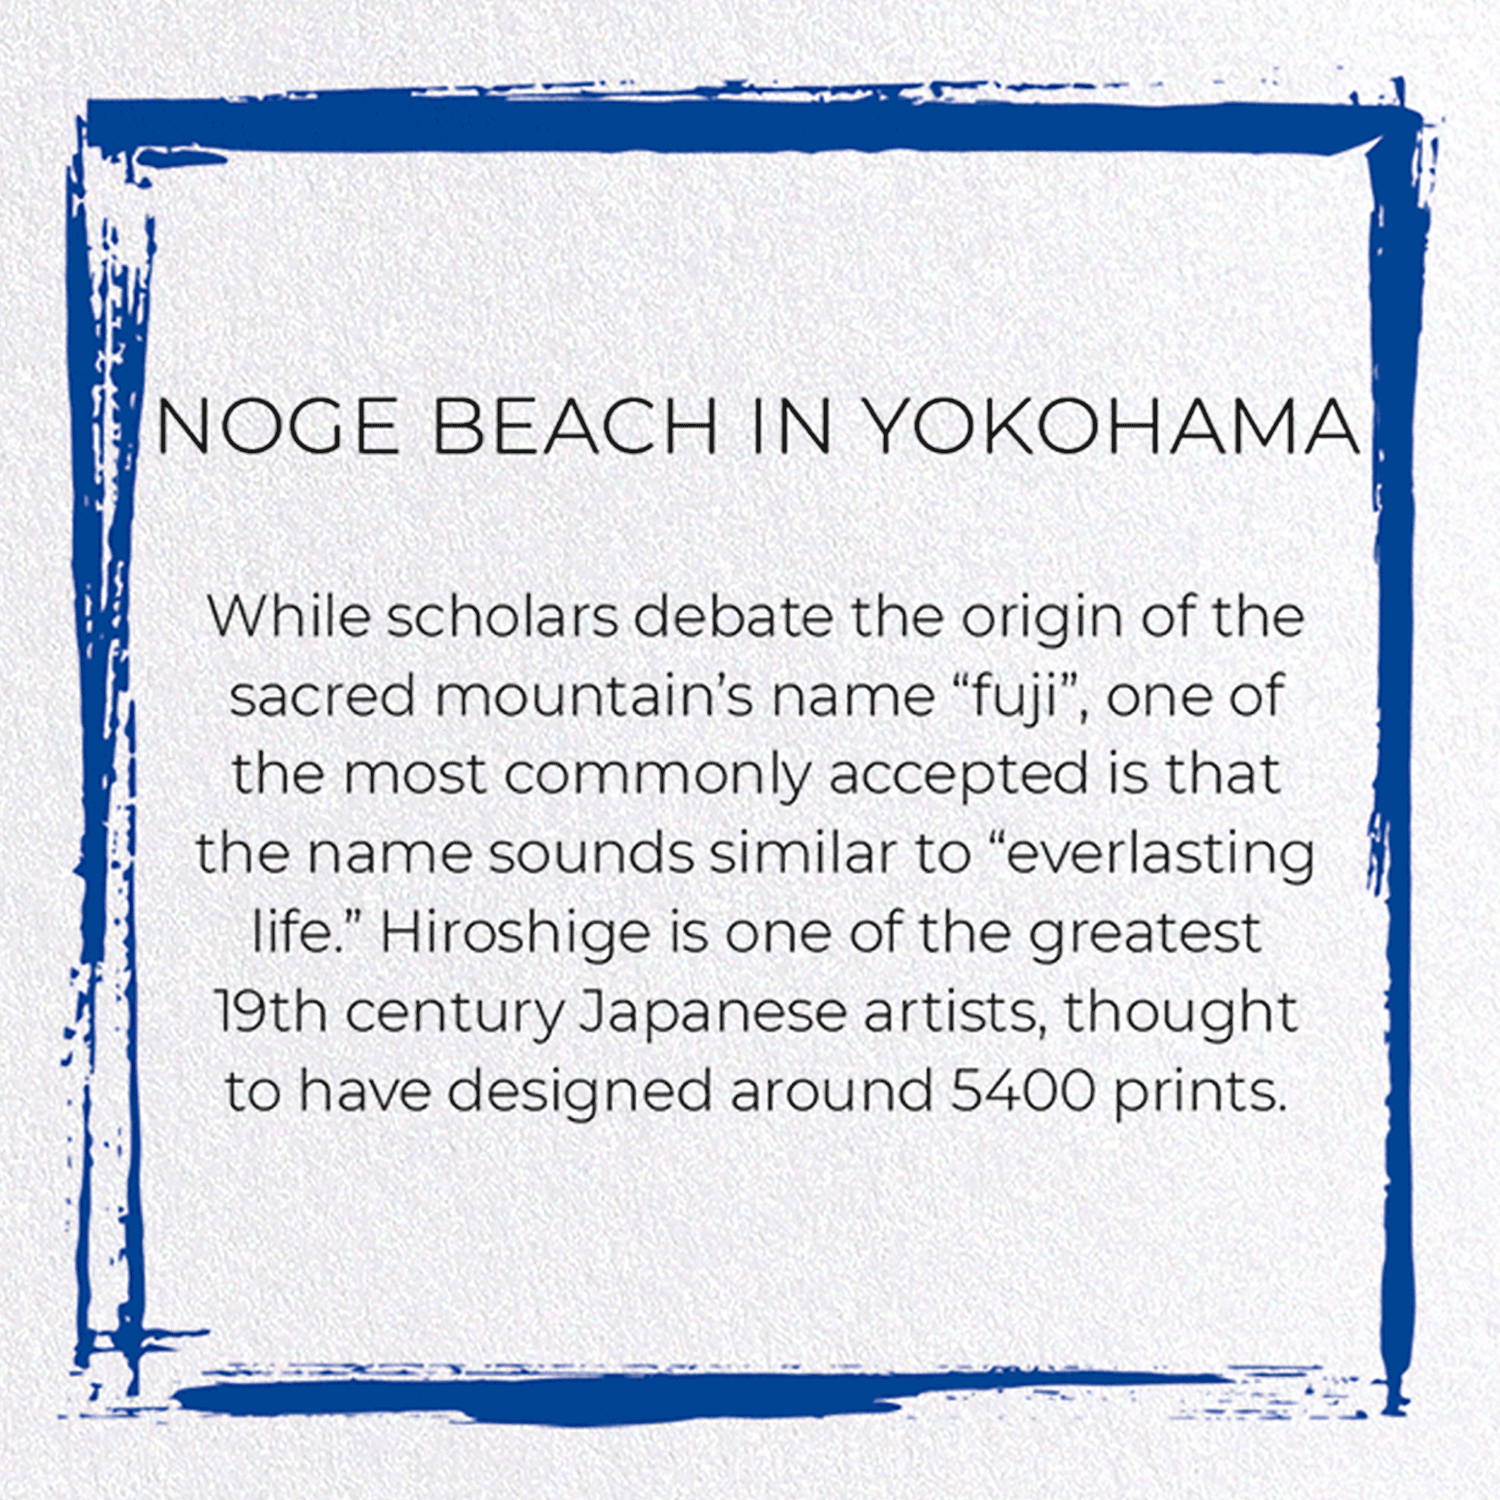 NOGE BEACH IN YOKOHAMA